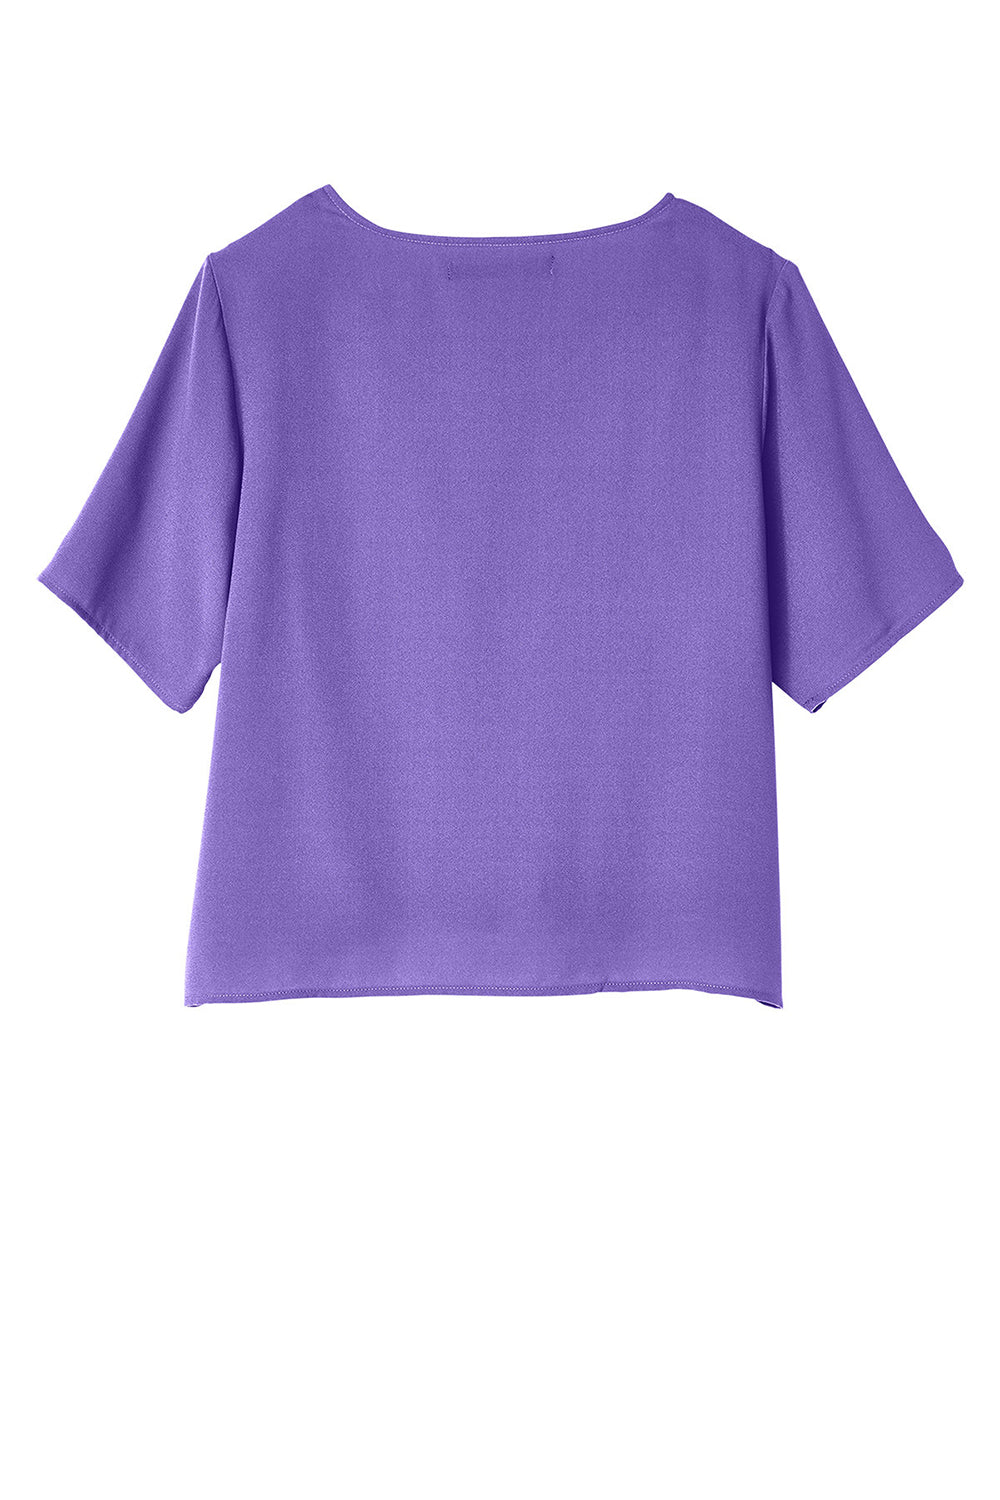 Devon & Jones DP617W Womens Perfect Fit Tie Front Short Sleeve Blouse Grape Purple Flat Back